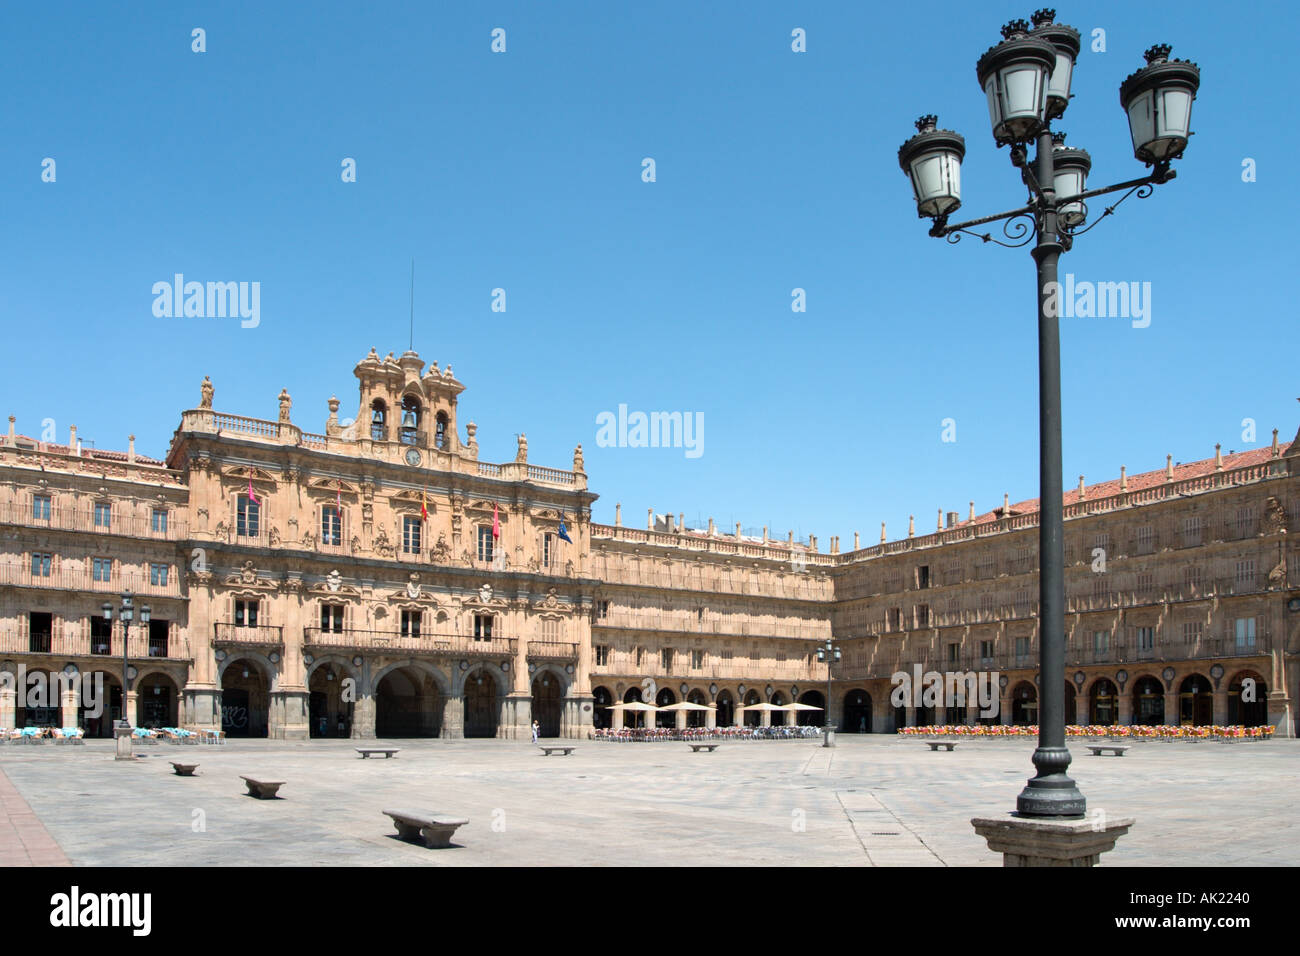 Ayuntamiento (Town Hall) in the Plaza Mayor (Main Square), Salamanca, Castilla y Leon, Spain Stock Photo